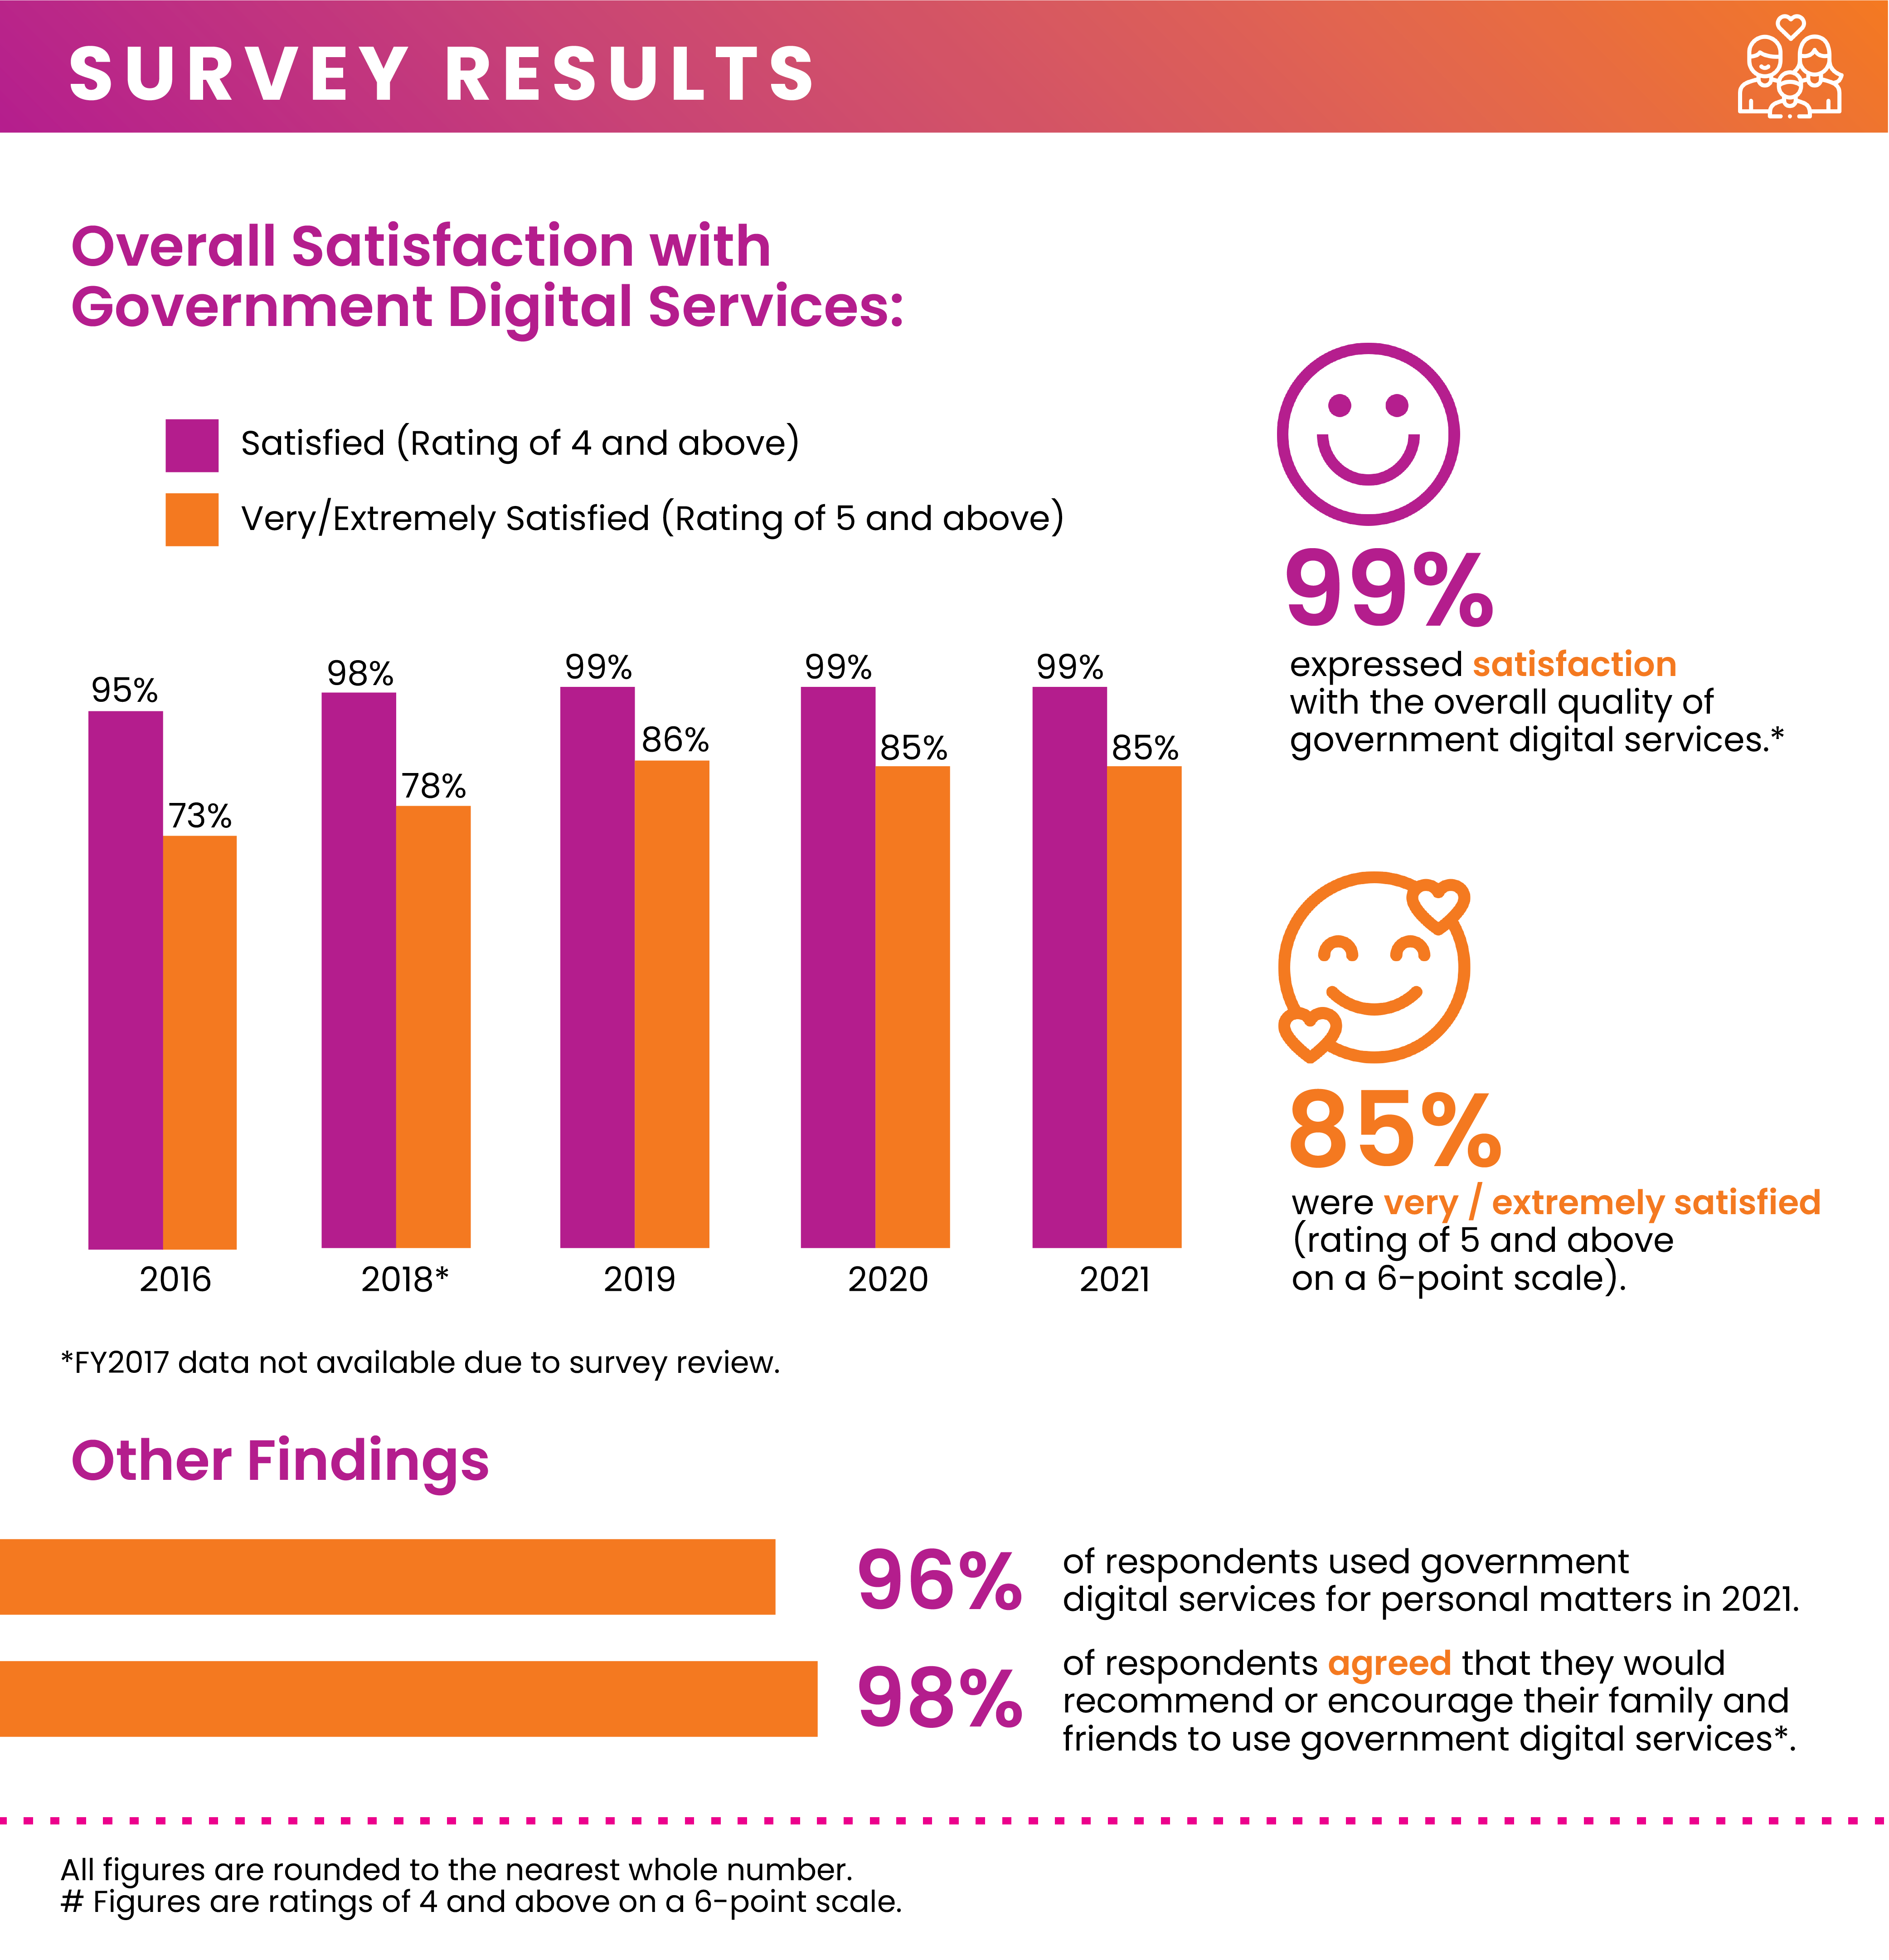 Digital Government Perception Survey 2021 for Citizens by GovTech